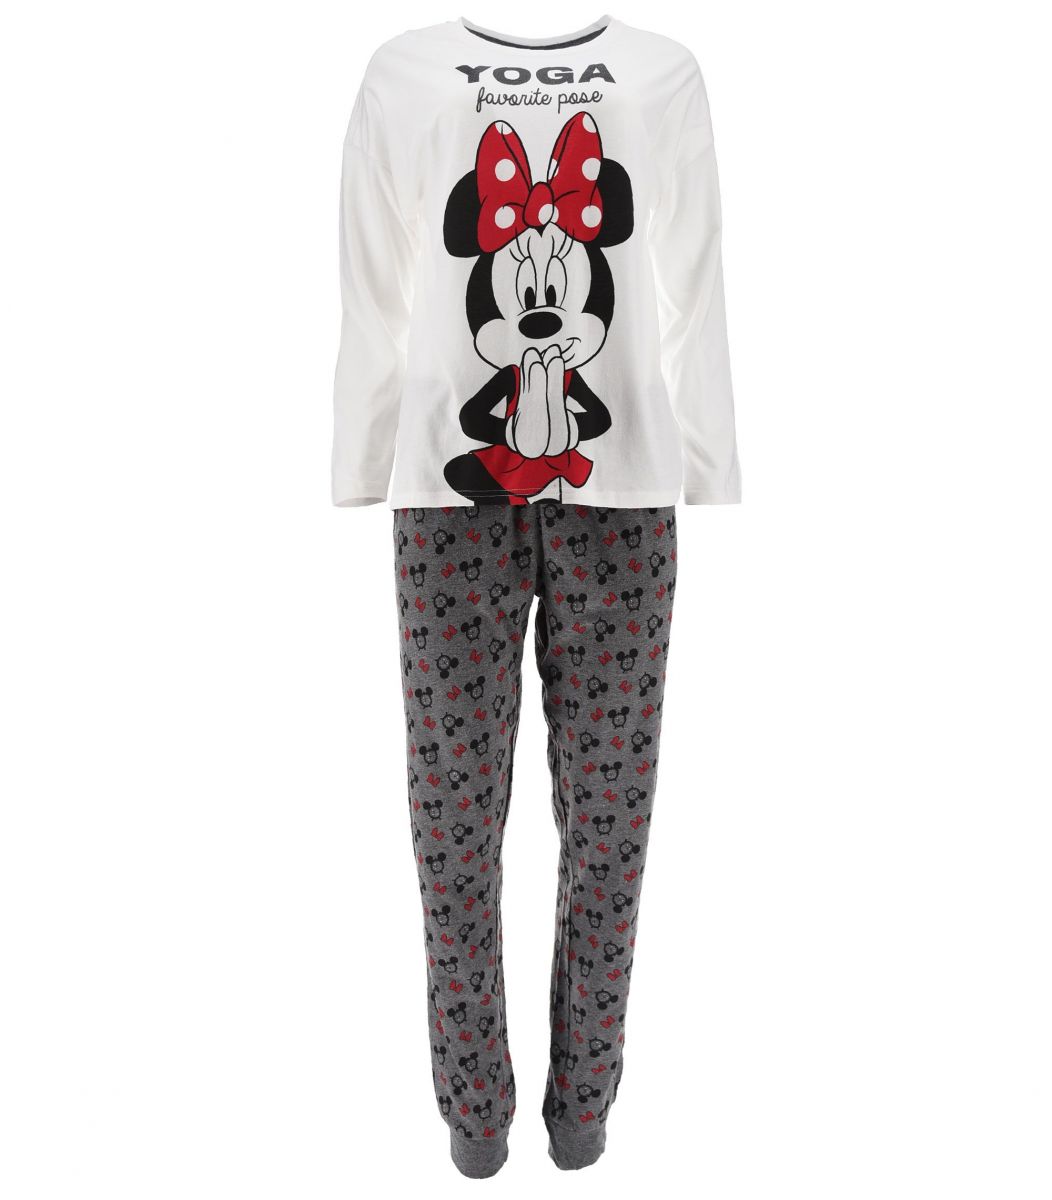  Sleepwear Marvel Minnie Mouse Yoga, women pajama SUHU3546-2